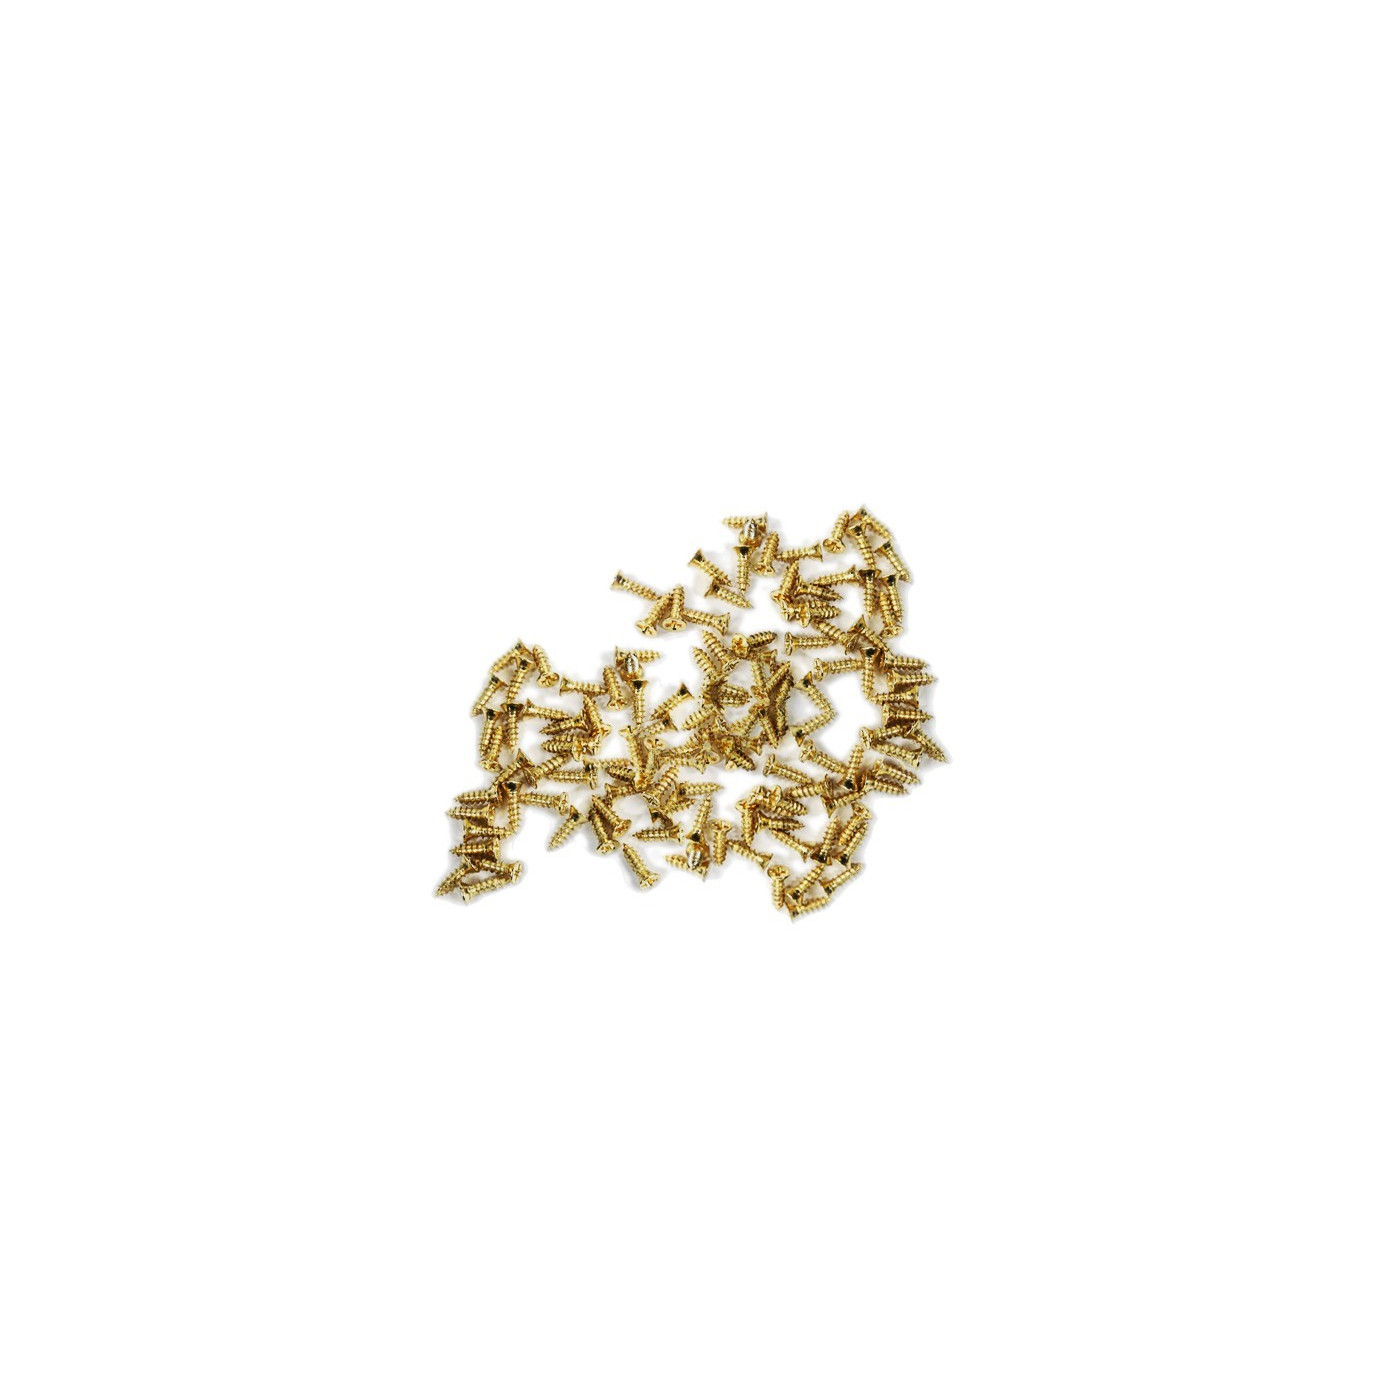 Set of 300 mini screws (2.5x10 mm, countersunk, gold color)